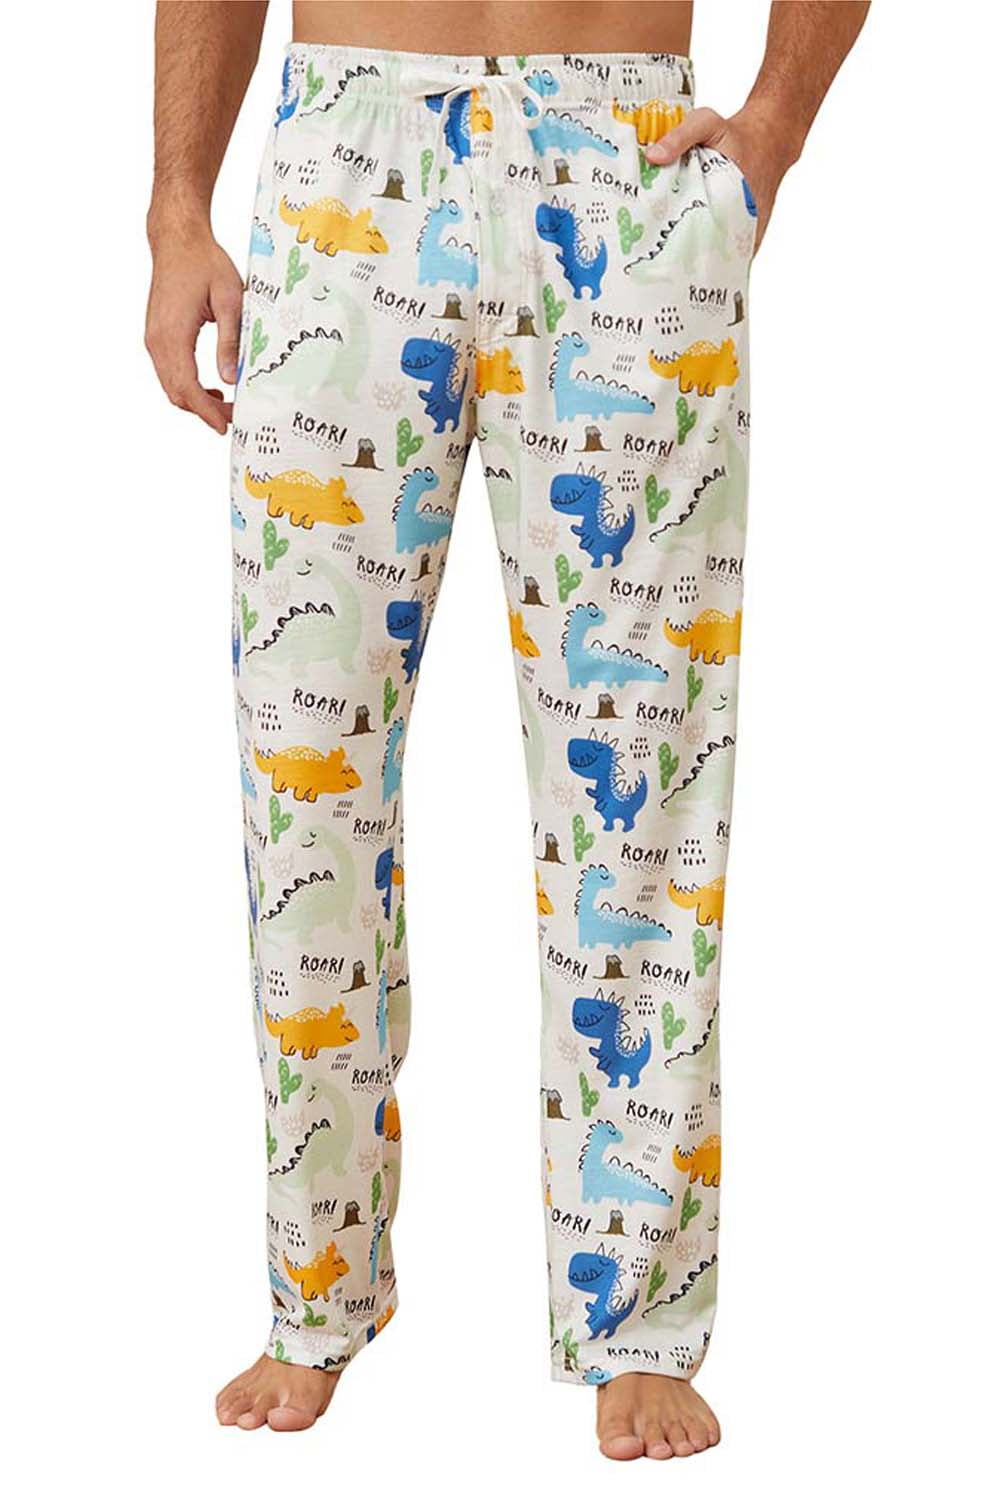 Vulcanodon Mens Funny Pajama Pants, Soft Lightweight Pajama Pants for ...